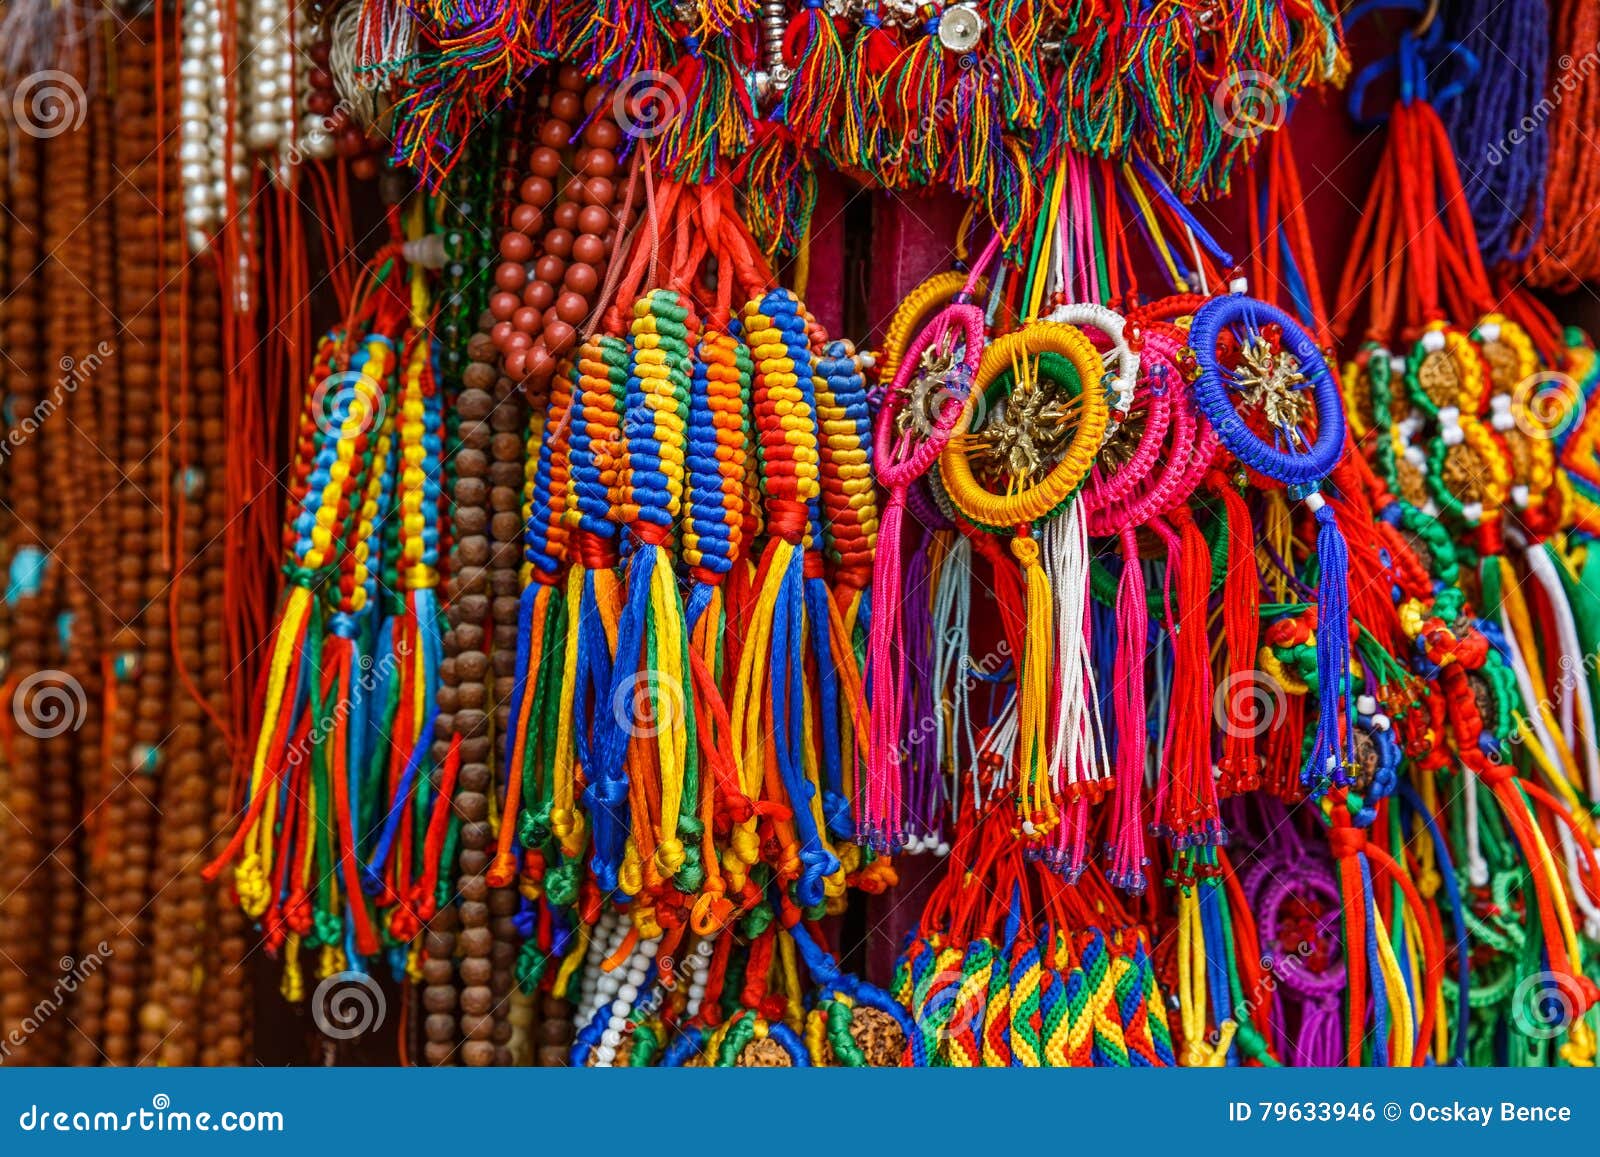 colorful nepalese keyrings